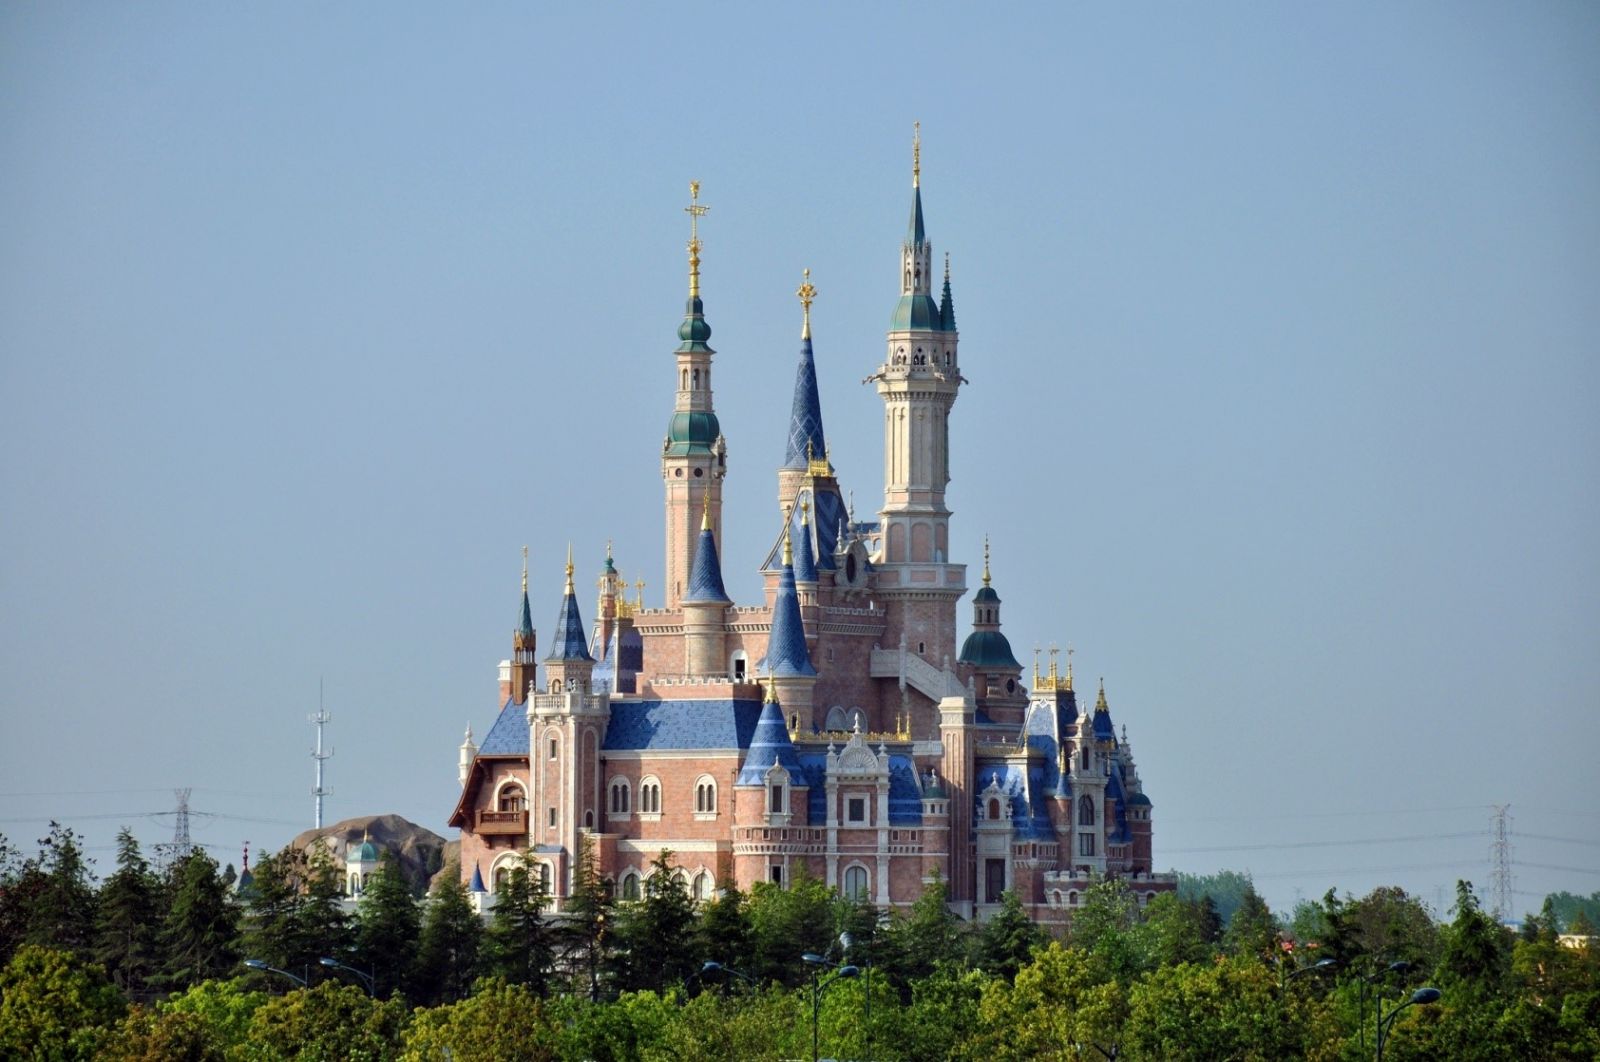 https://upload.wikimedia.org/wikipedia/commons/2/2e/Enchanted_Storybook_Castle_of_Shanghai_Disneyland.jpg